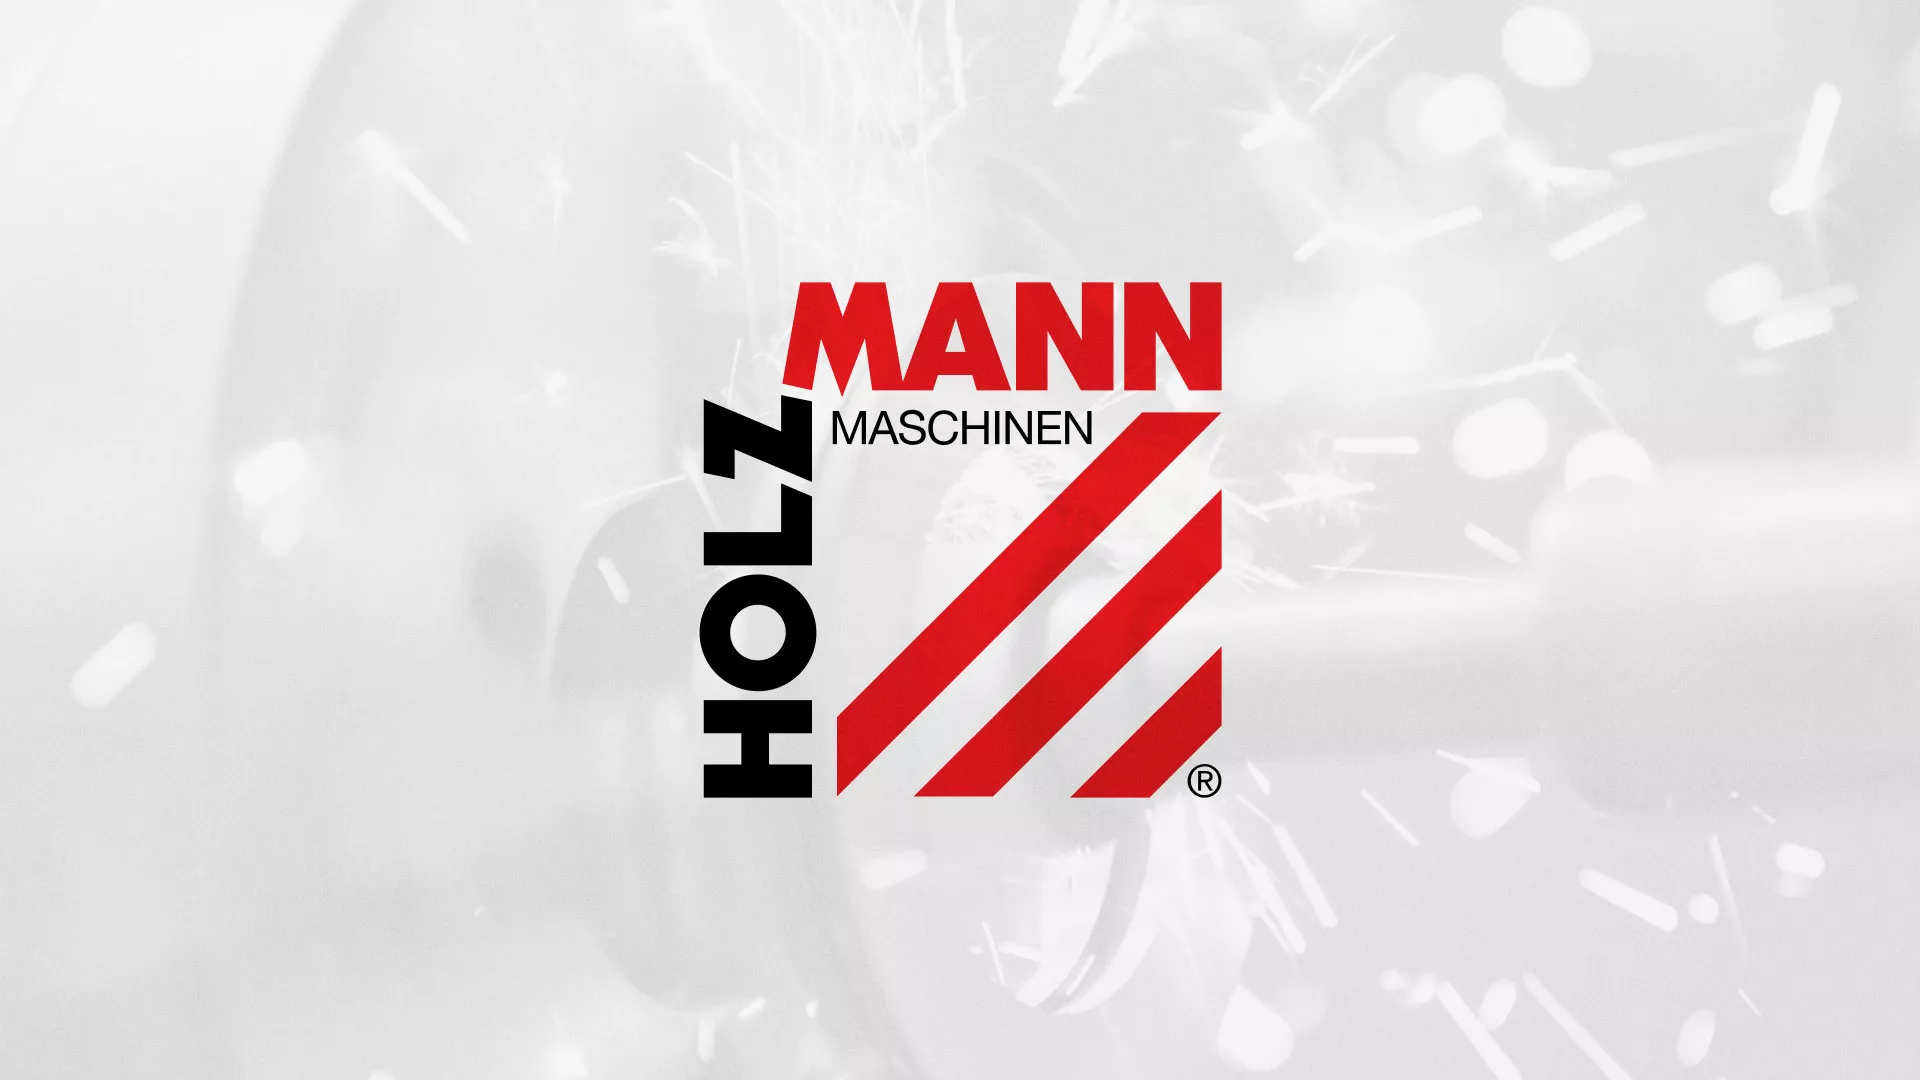 Создание сайта компании «HOLZMANN Maschinen GmbH» в Колпино